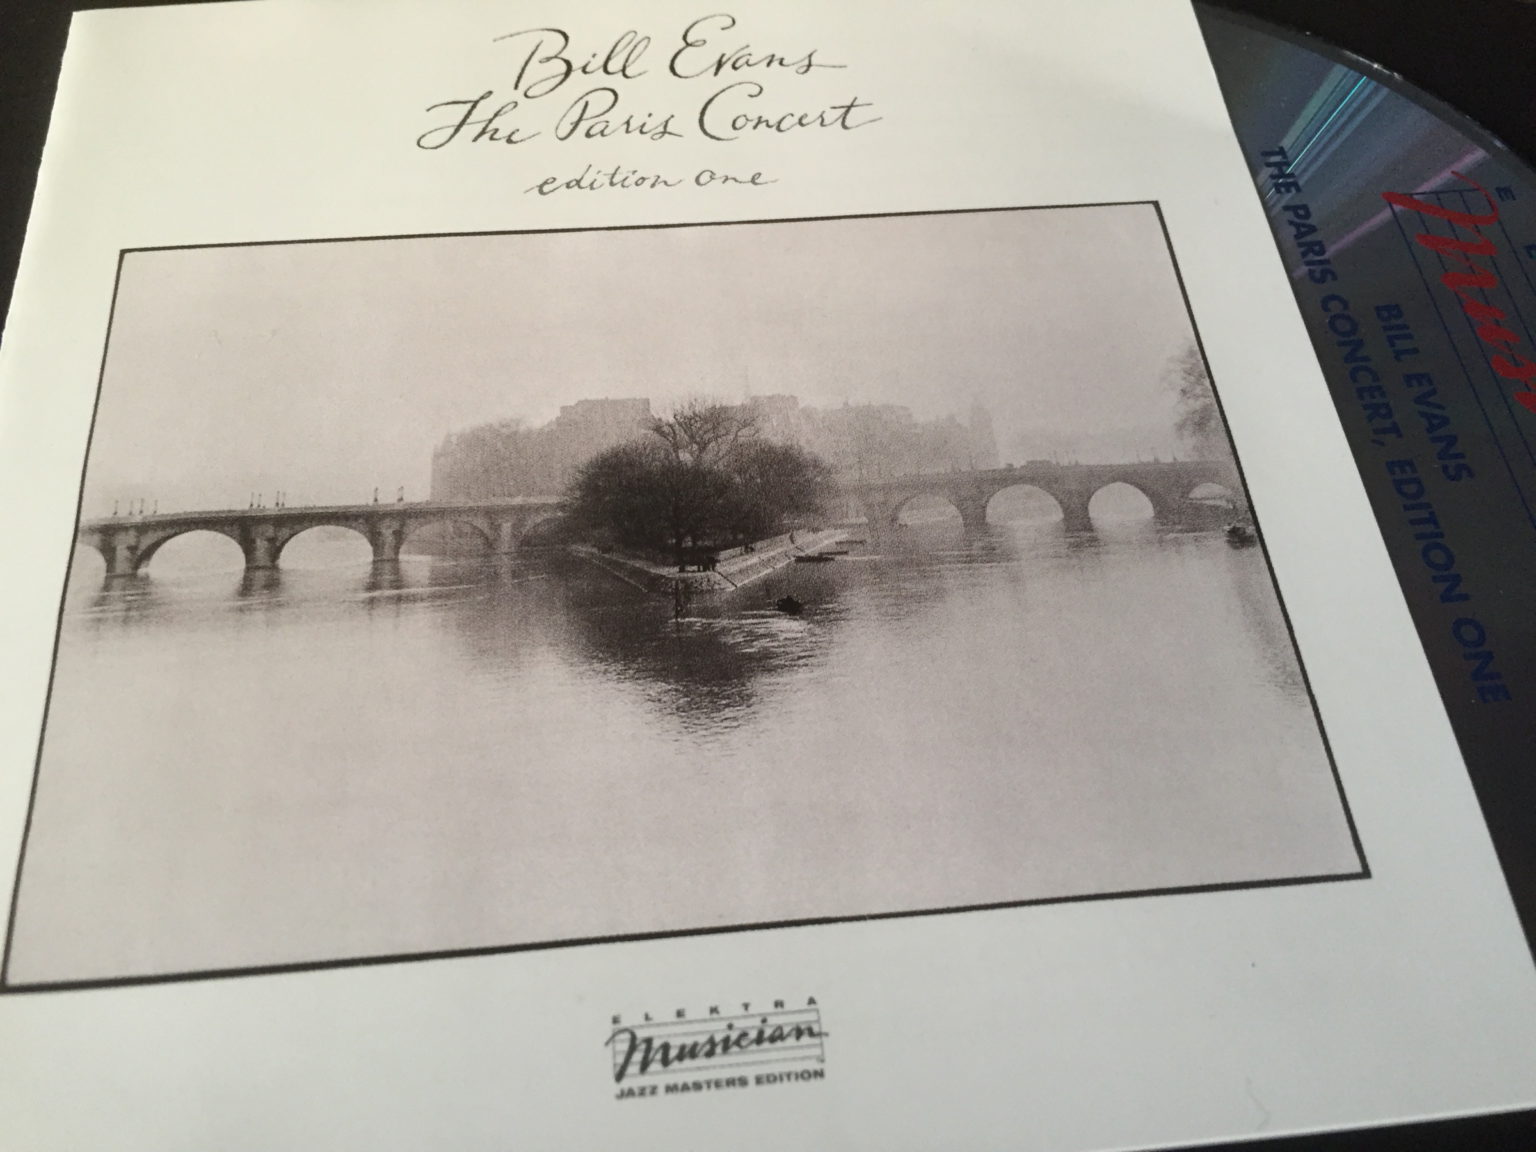 ORG Bill Evans Paris Concert Edition Oneレコード - その他